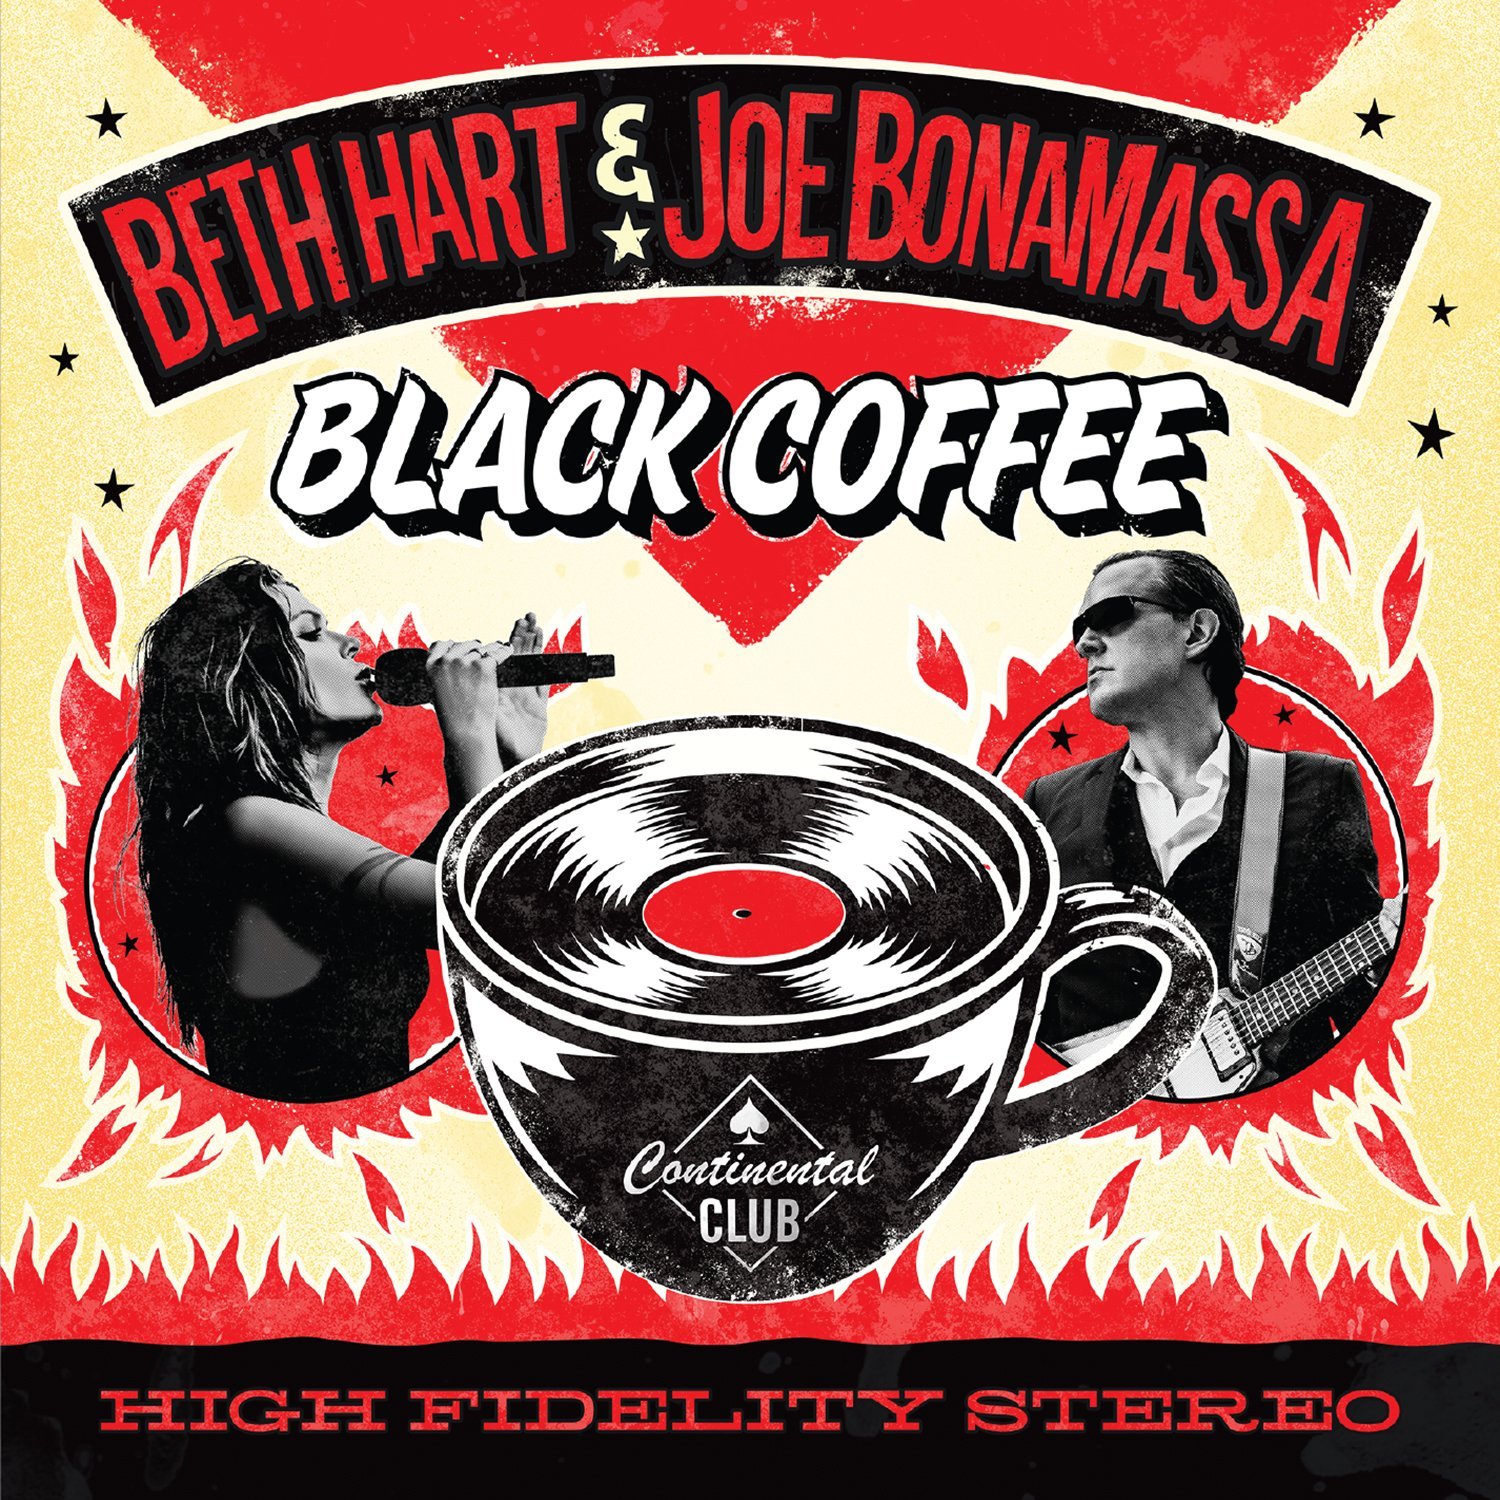 Beth Hart and Joe Bonamassa: Black Coffee